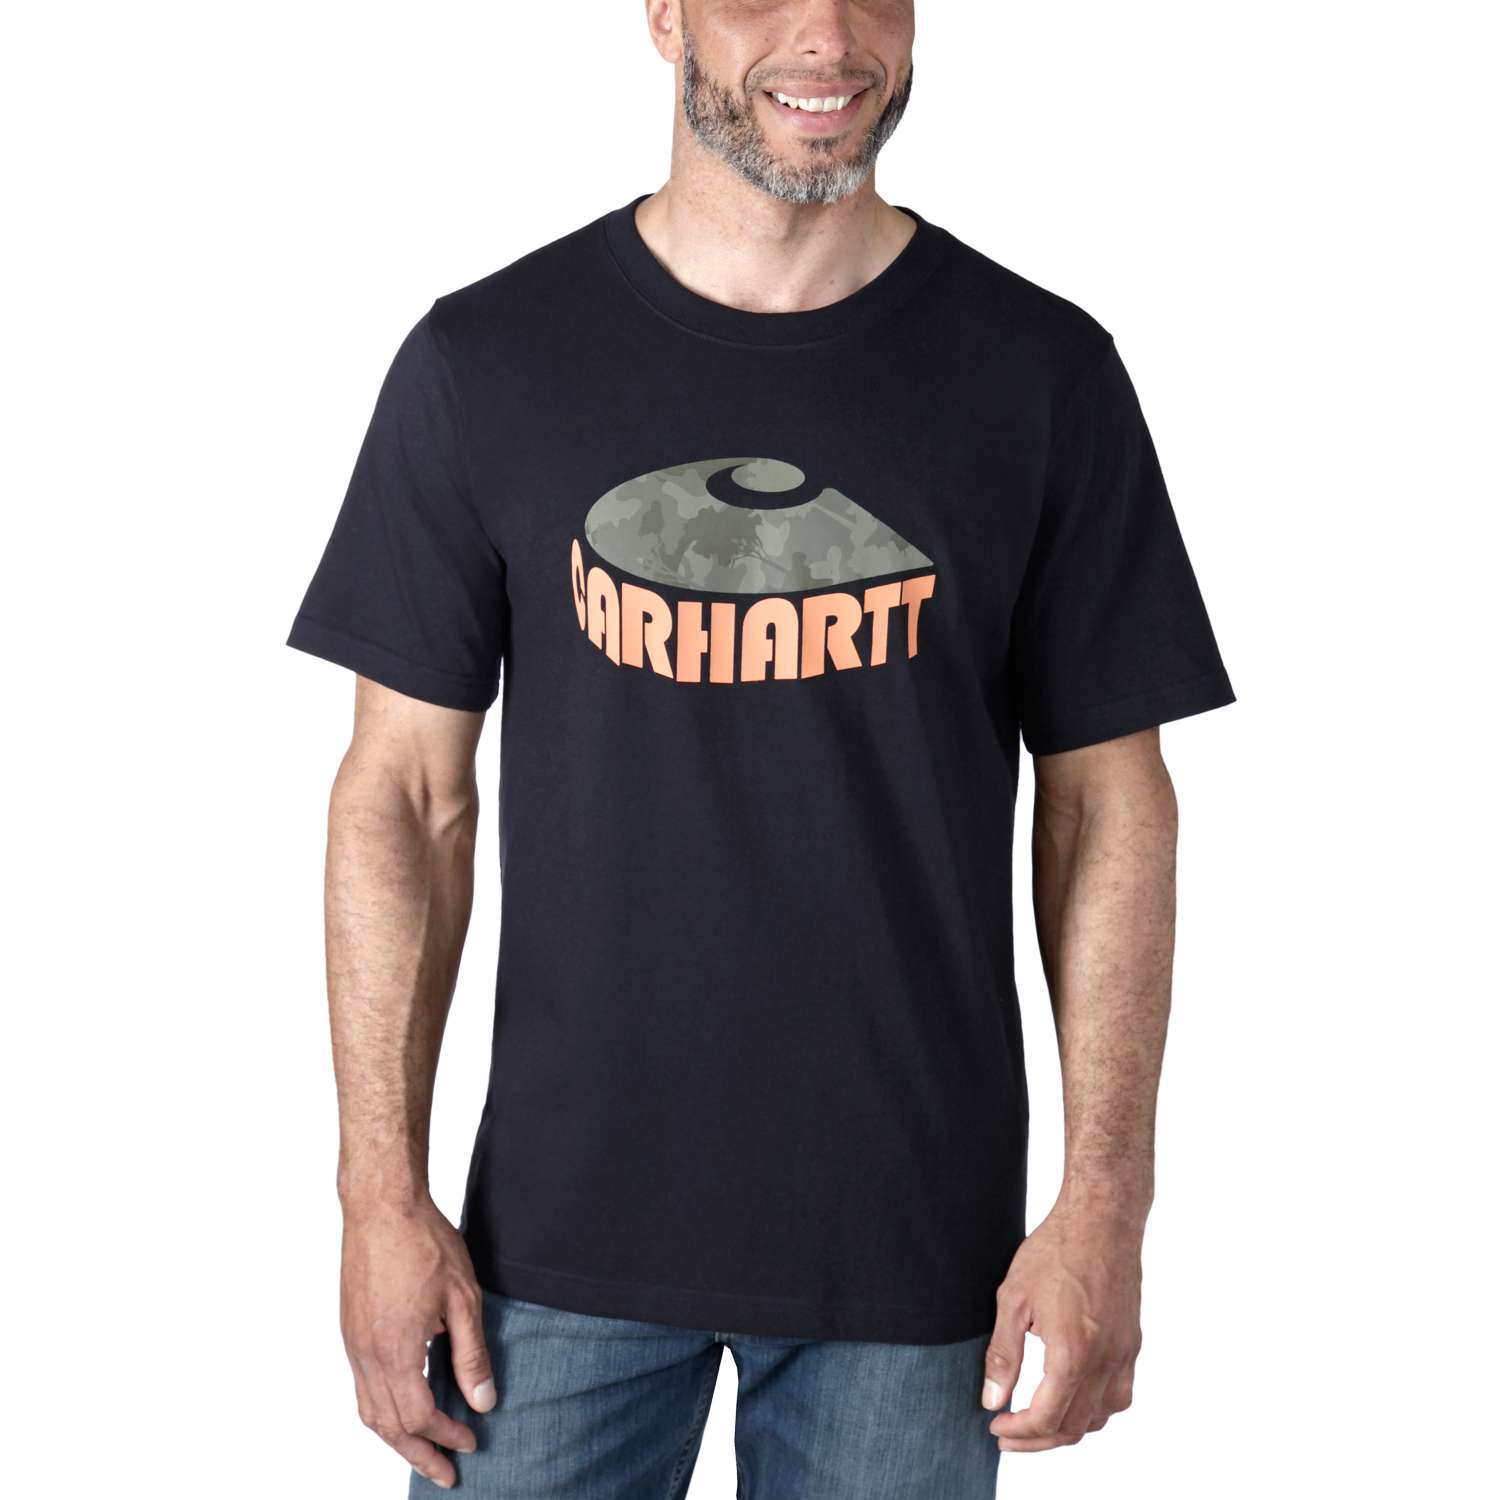 carhartt® Herren-T-Shirt »S/SLEEVE CAMO C GRAPHIC T-SHIRT« - Gr. S, black - bei HUG Technik ✓